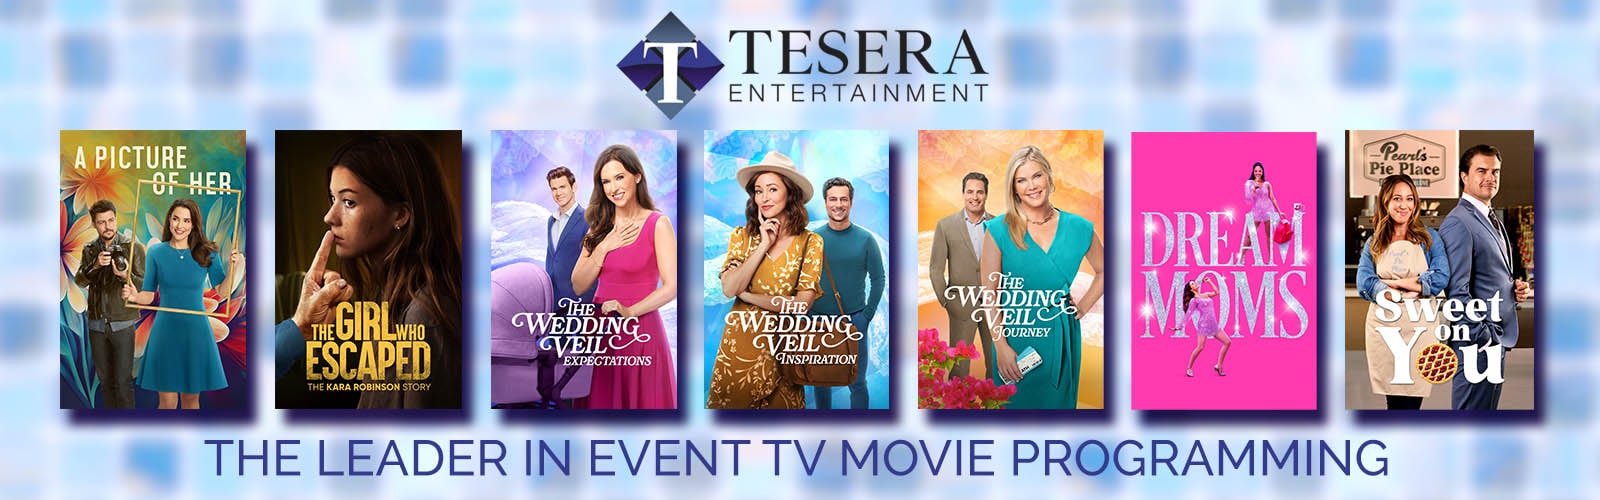 Tesera Entertainment banner 1600